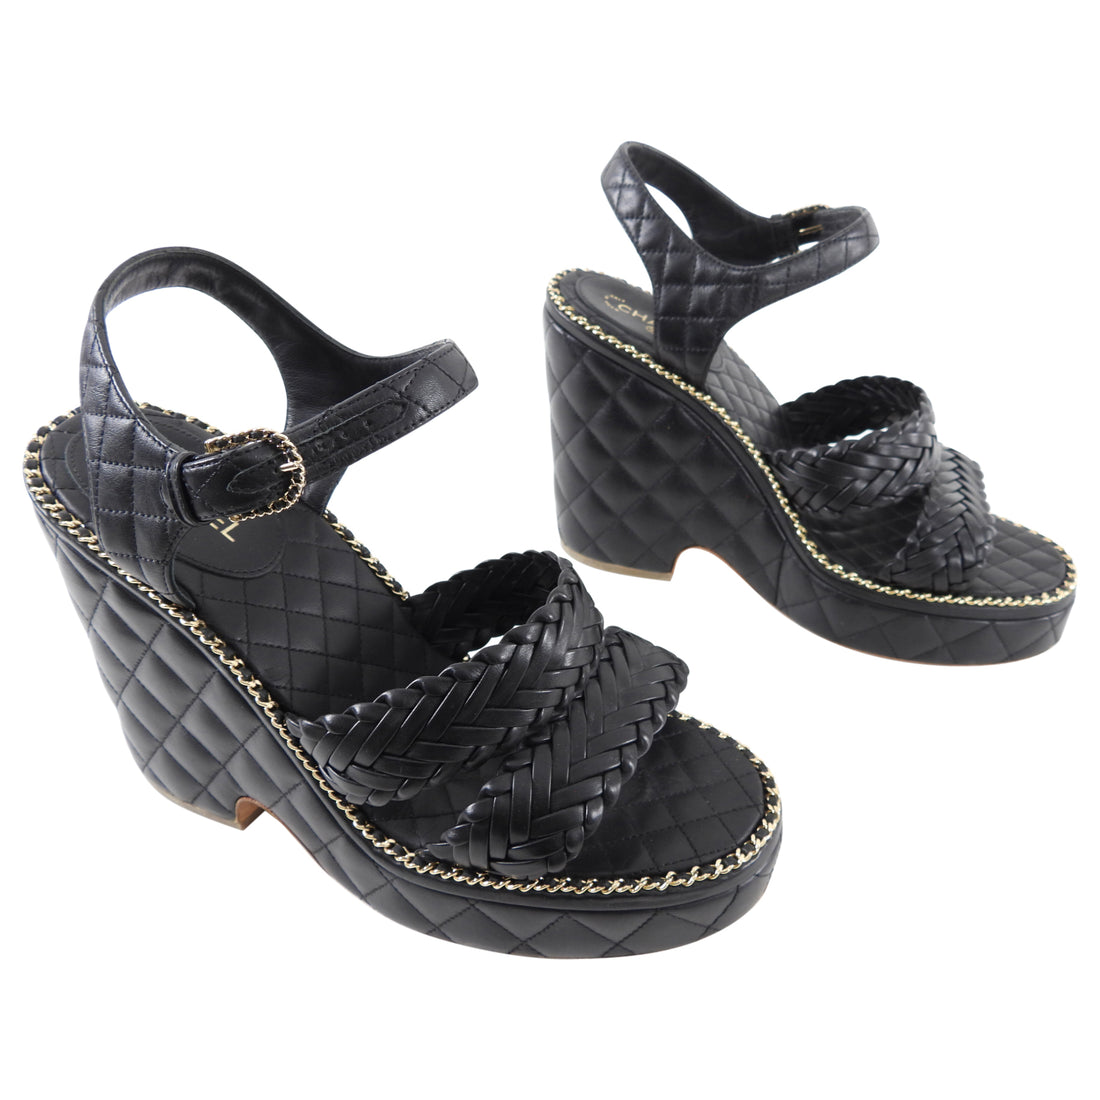 Chanel Black Leather and Wood Platform Sandals Size 8.5/39